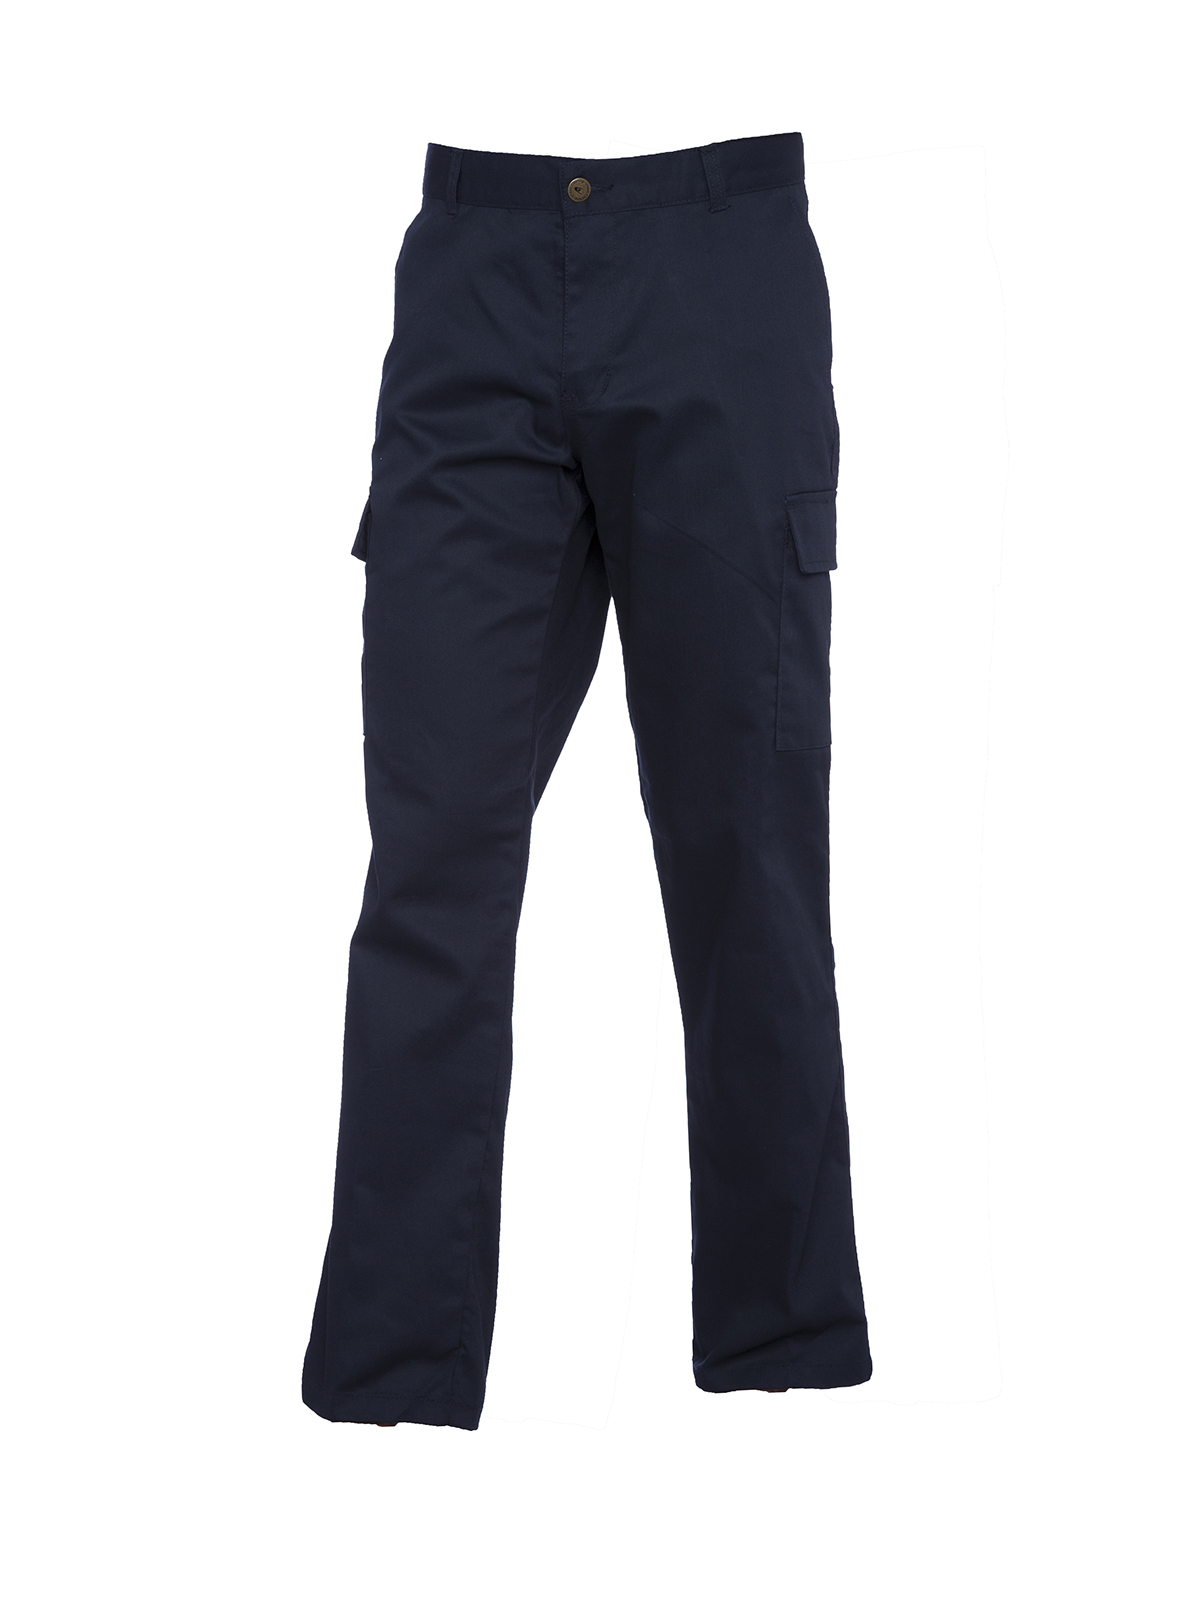 Ladies Cargo Trousers, Navy - Size 16